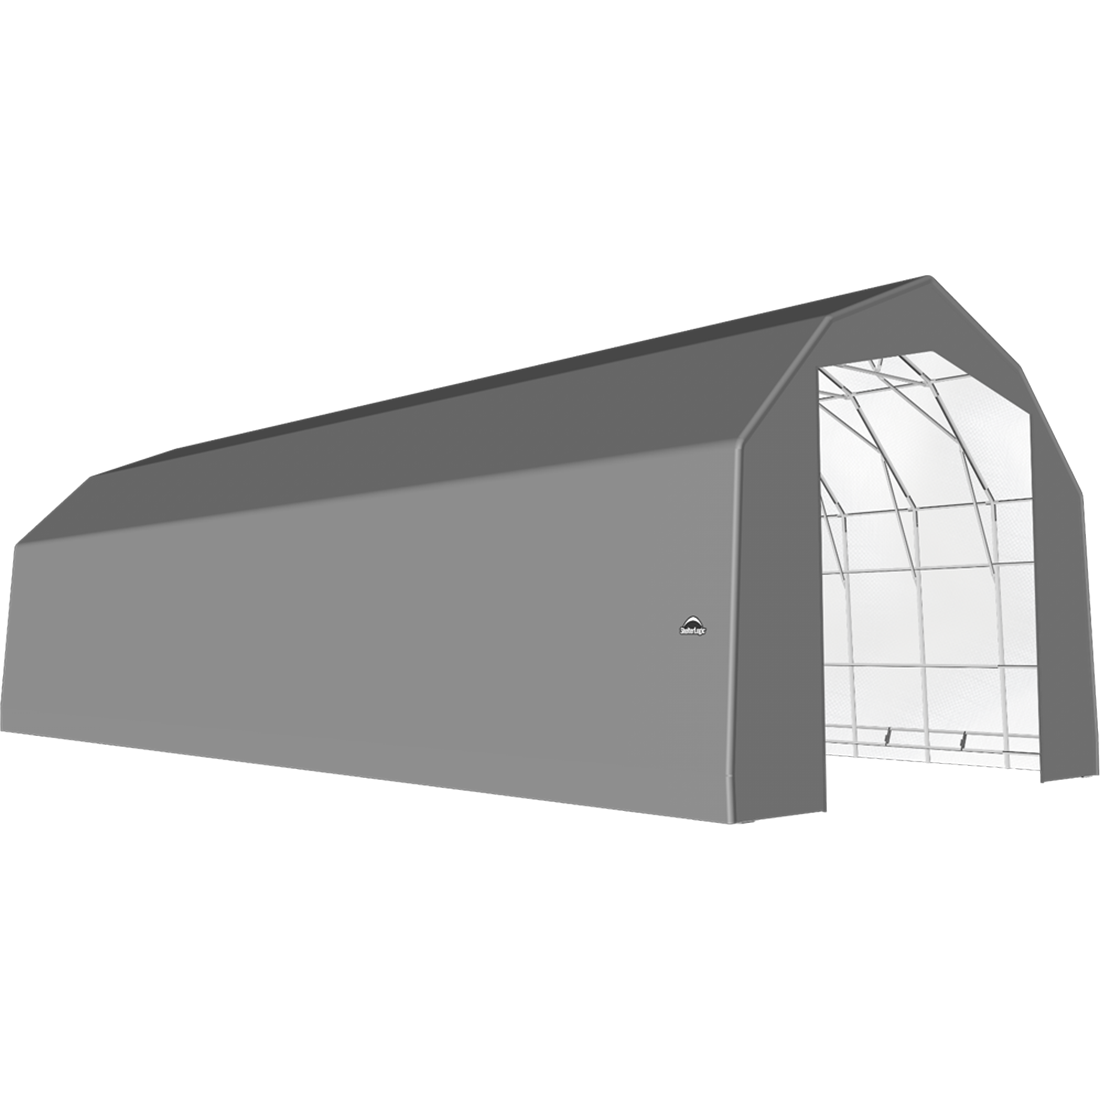 ShelterTech SP Series Barn Shelter, 25 ft. x 64 ft. x 20 ft. Heavy Duty PVC 14.5 oz. Gray